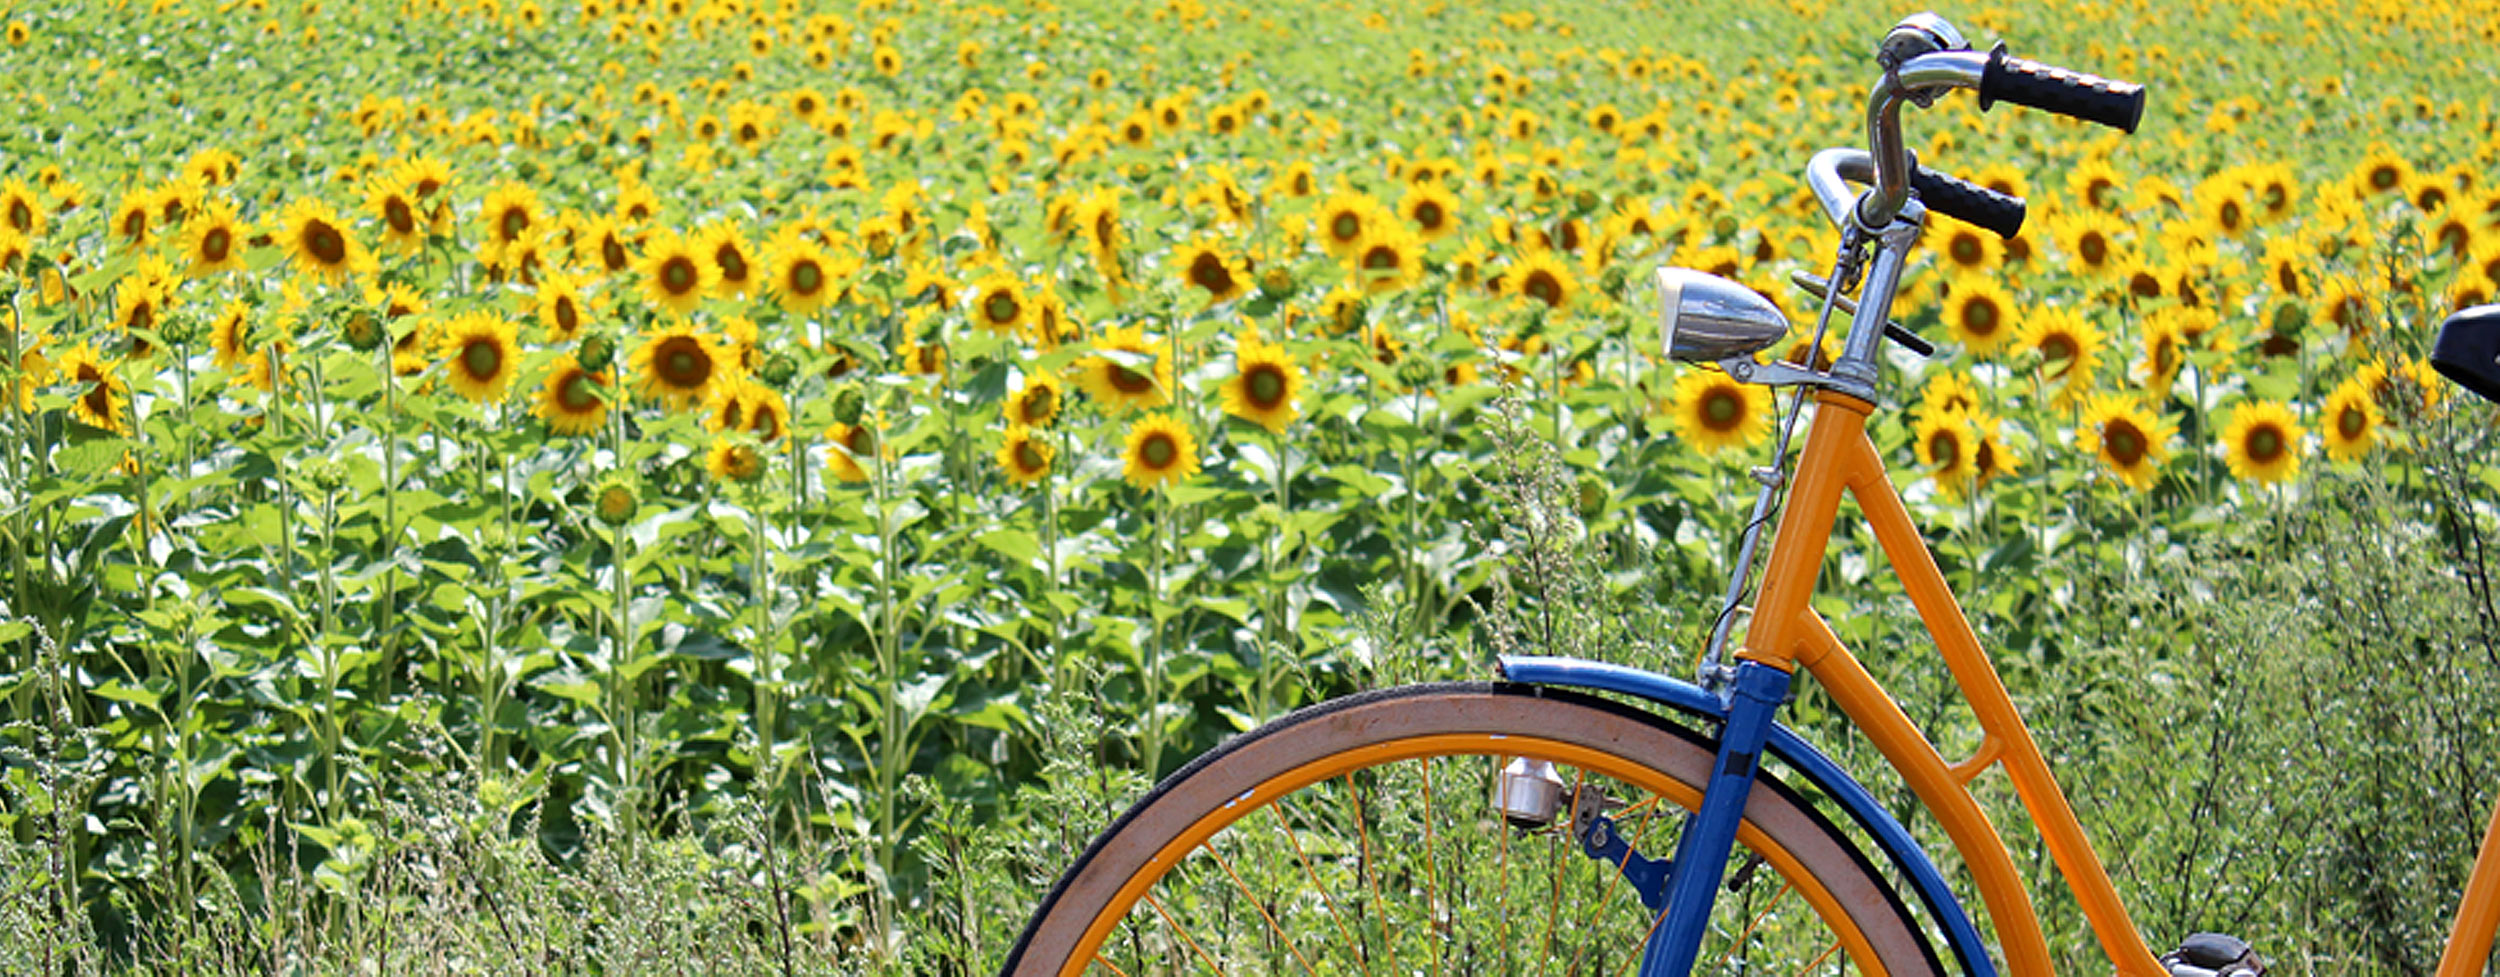 Sonnenblumenfeld und Fahrrad